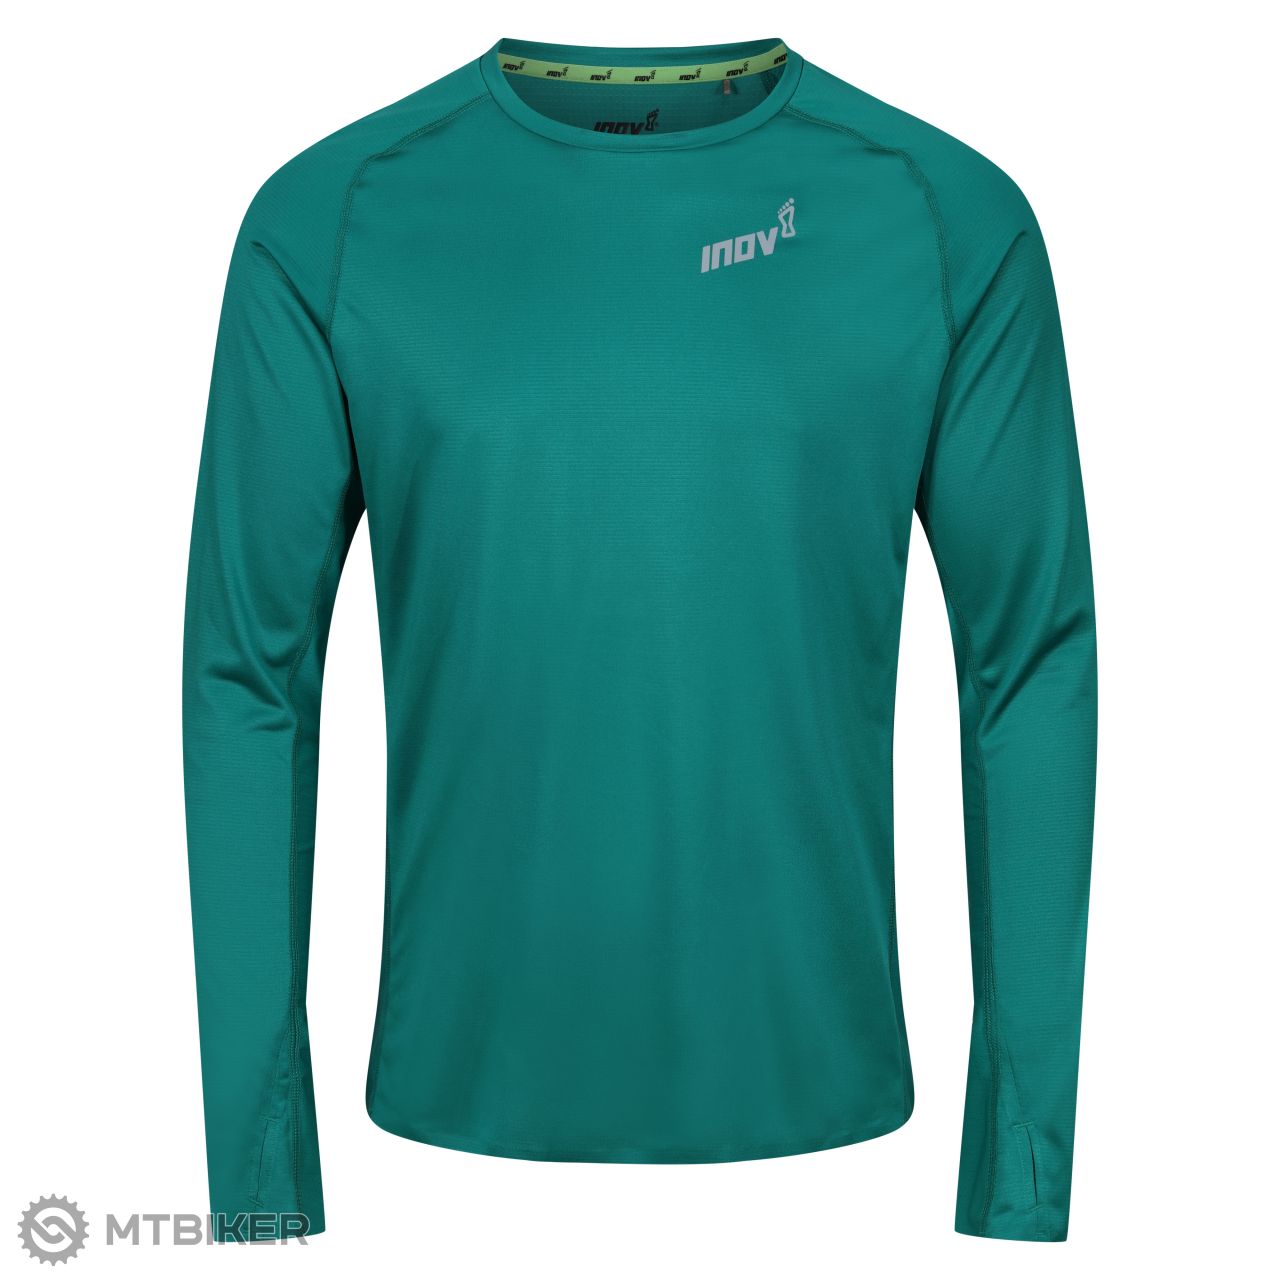 inov-8 BASE ELITE LS shirt, green